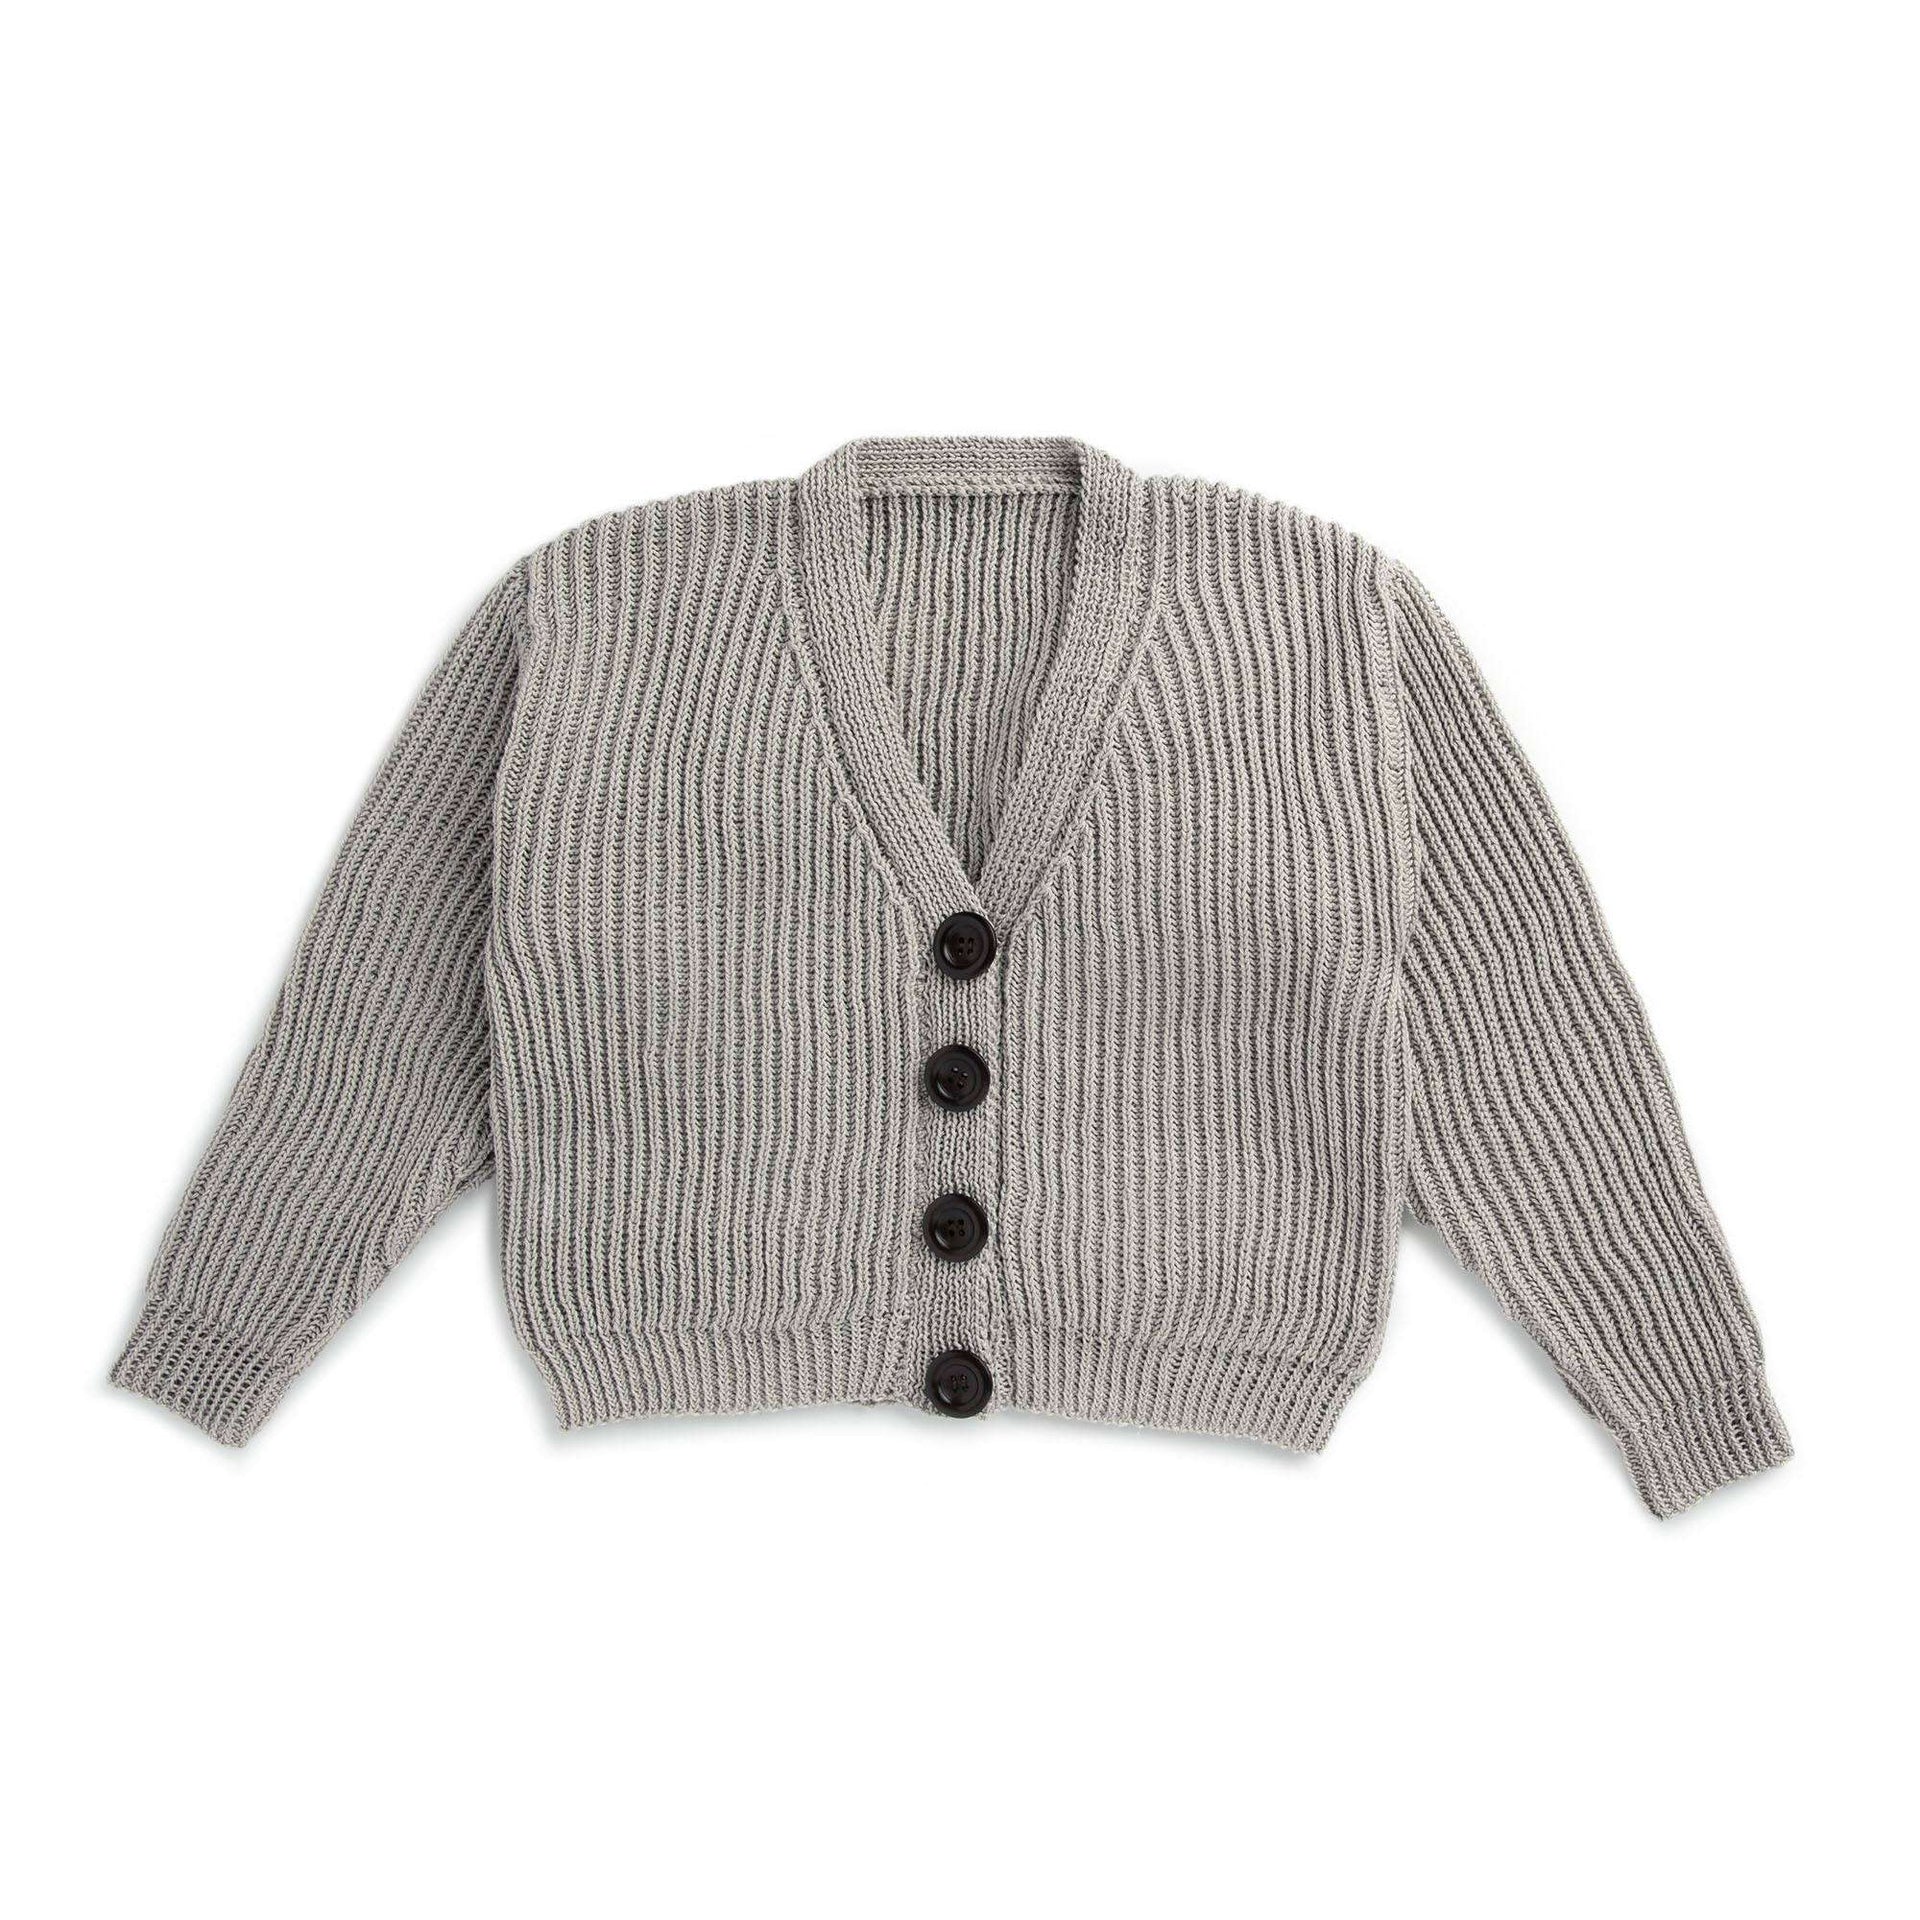 Free Knitting Pattern: Trinity Bellwoods Knit Bralette - I Love Yarn Forever